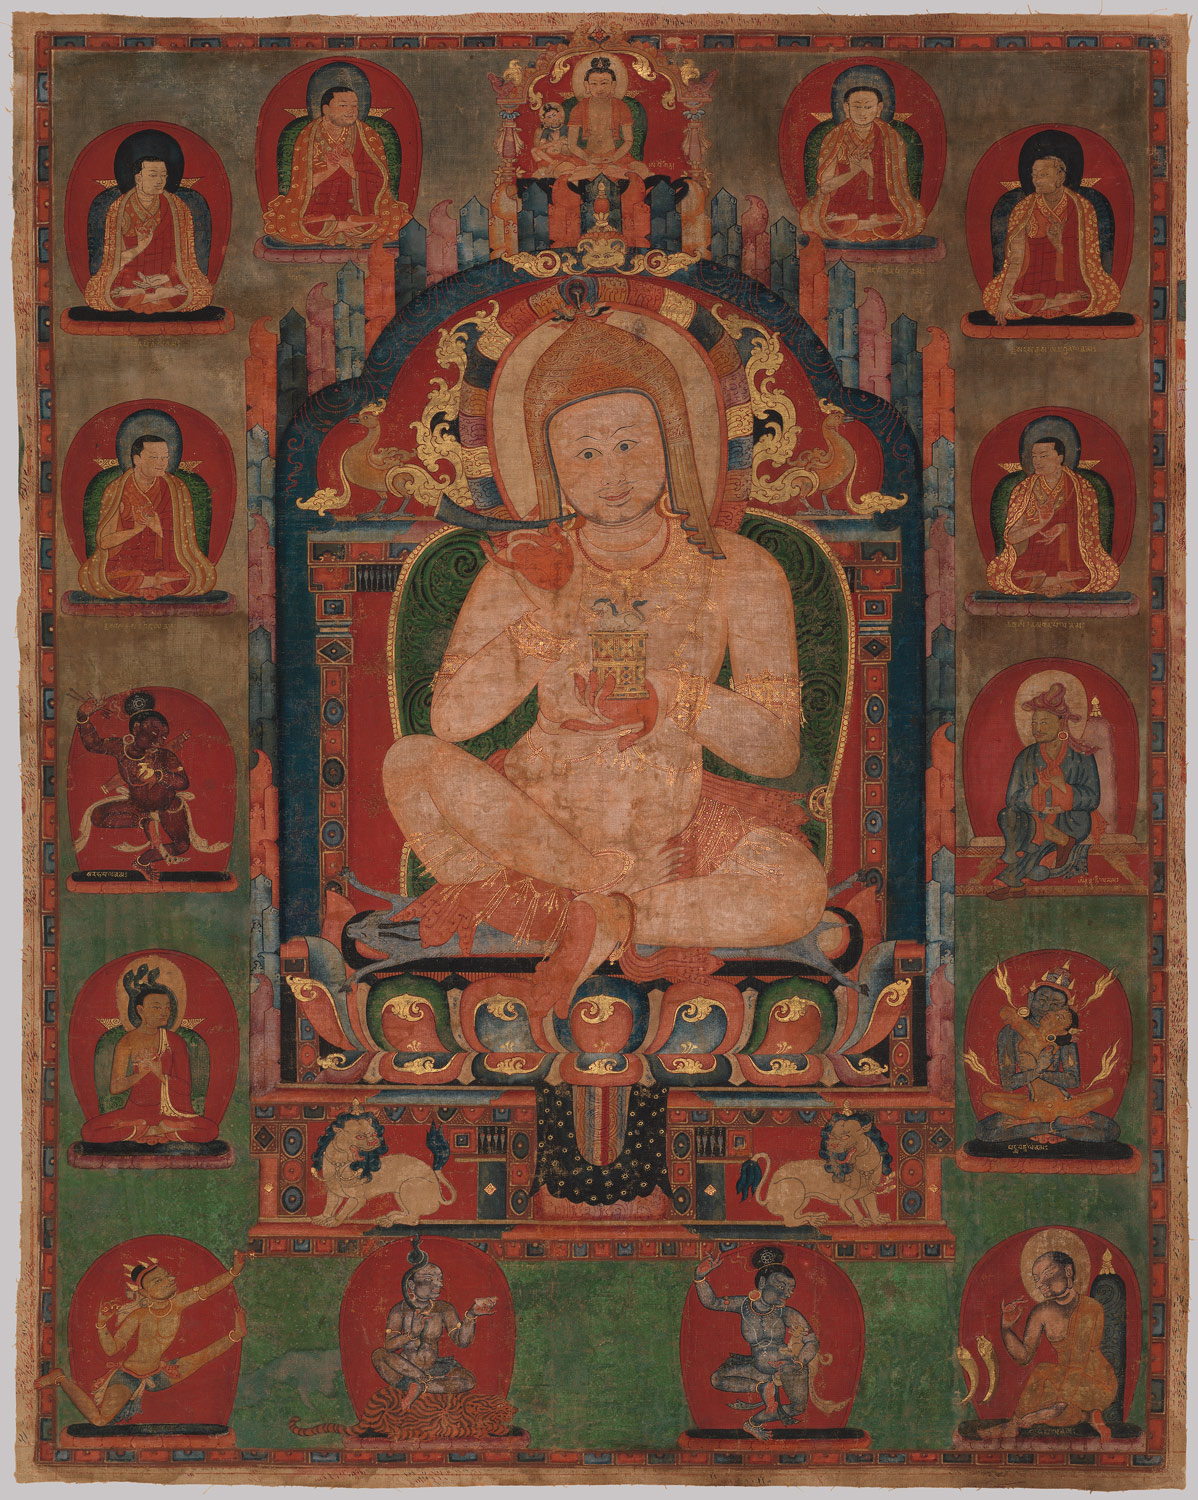 Portrait of Jnanatapa surrounded by lamas and mahasiddhas